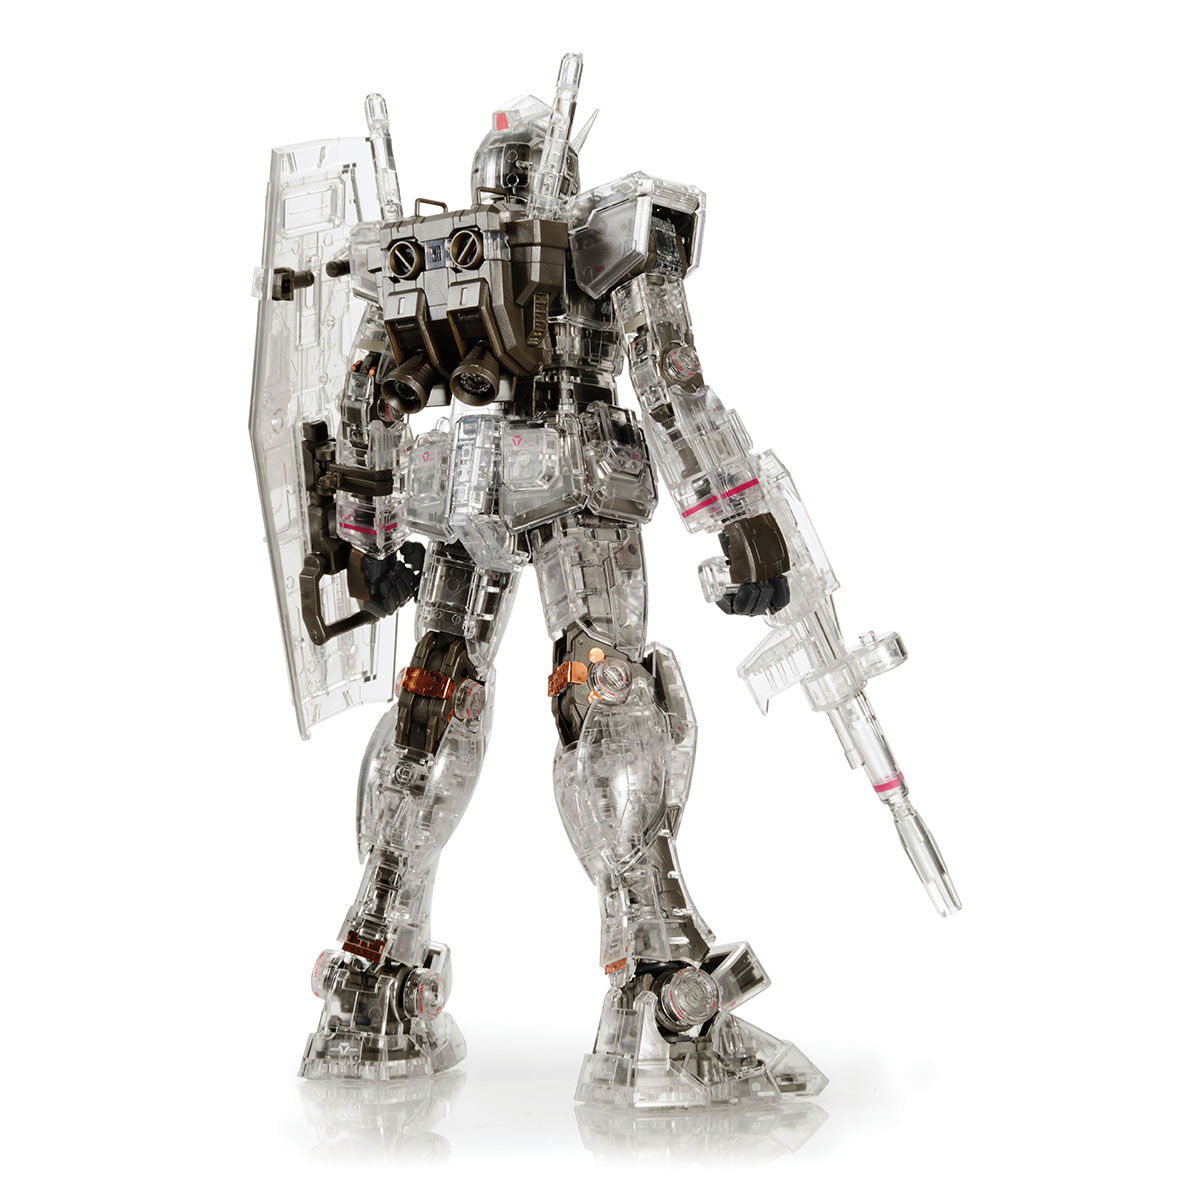 MG 1/100 RX-78-2 Gundam Ver.3.0(Mechanical Clear)